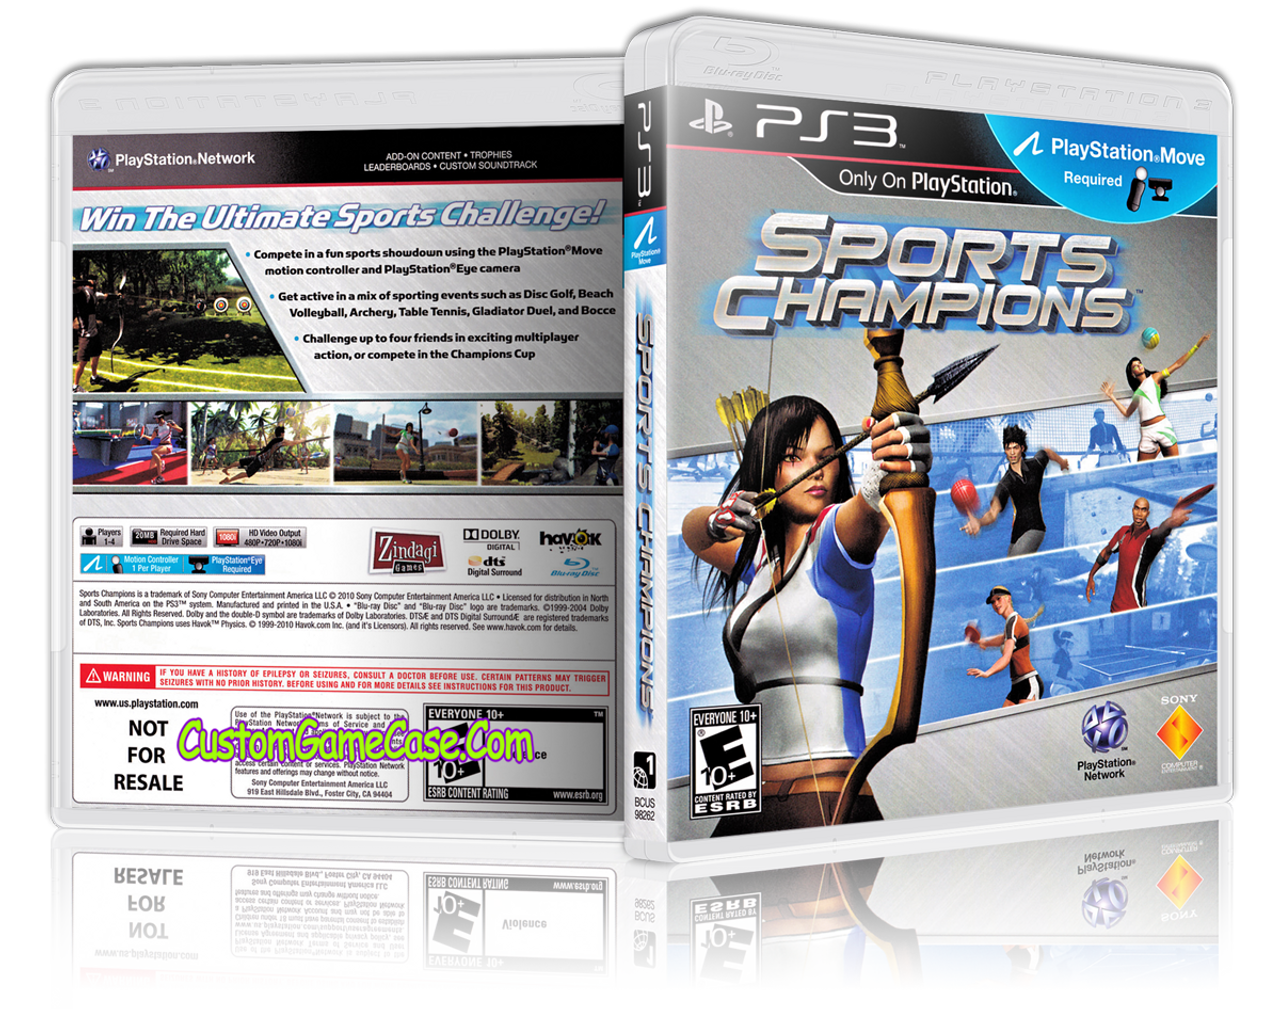 Sports Champions 2 - Playstation 3